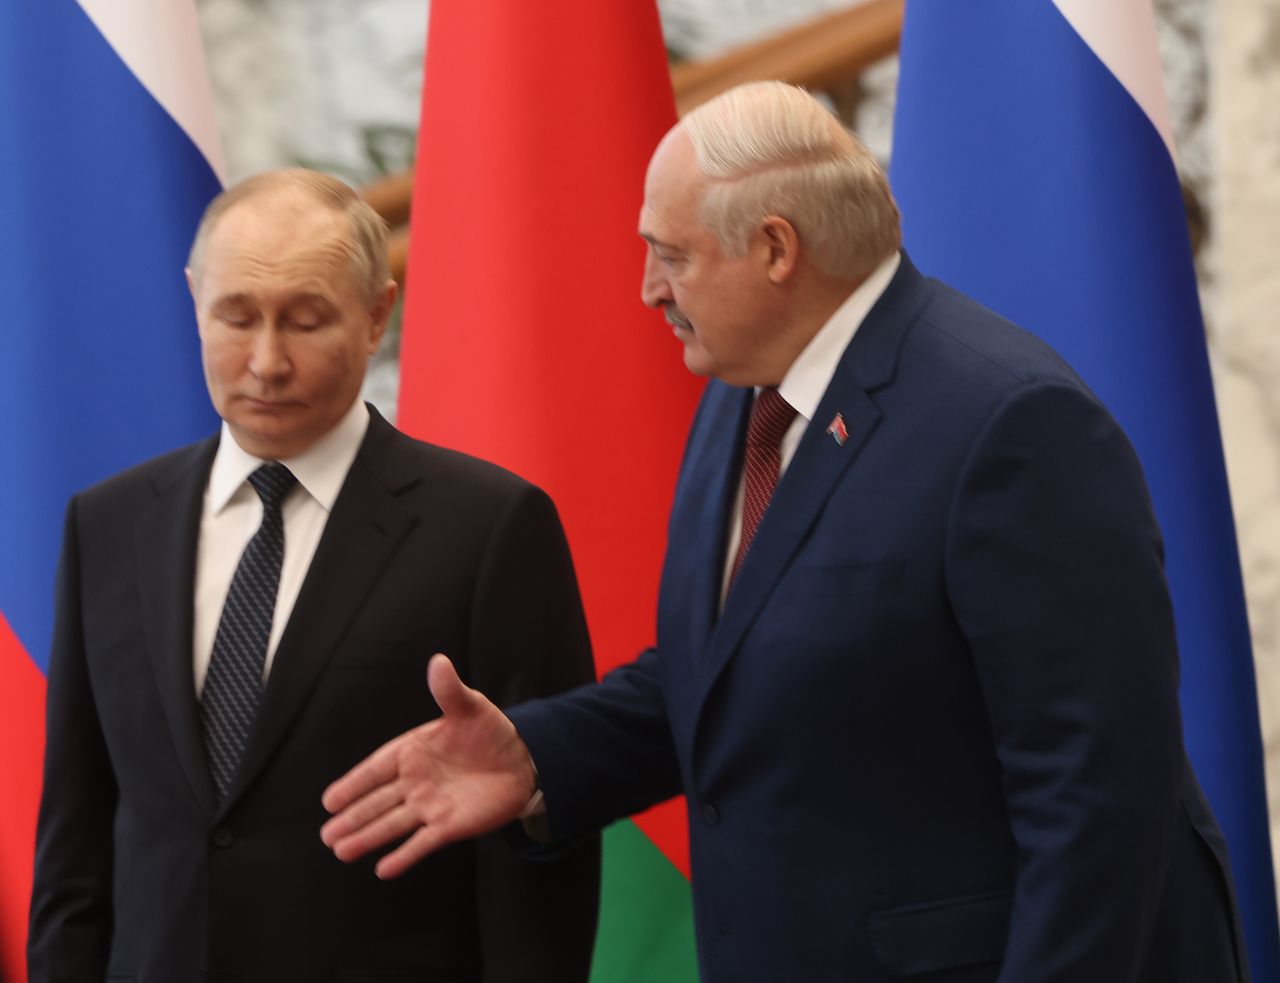 Putin's Belarus visit raises questions on 'new Ukraine center'